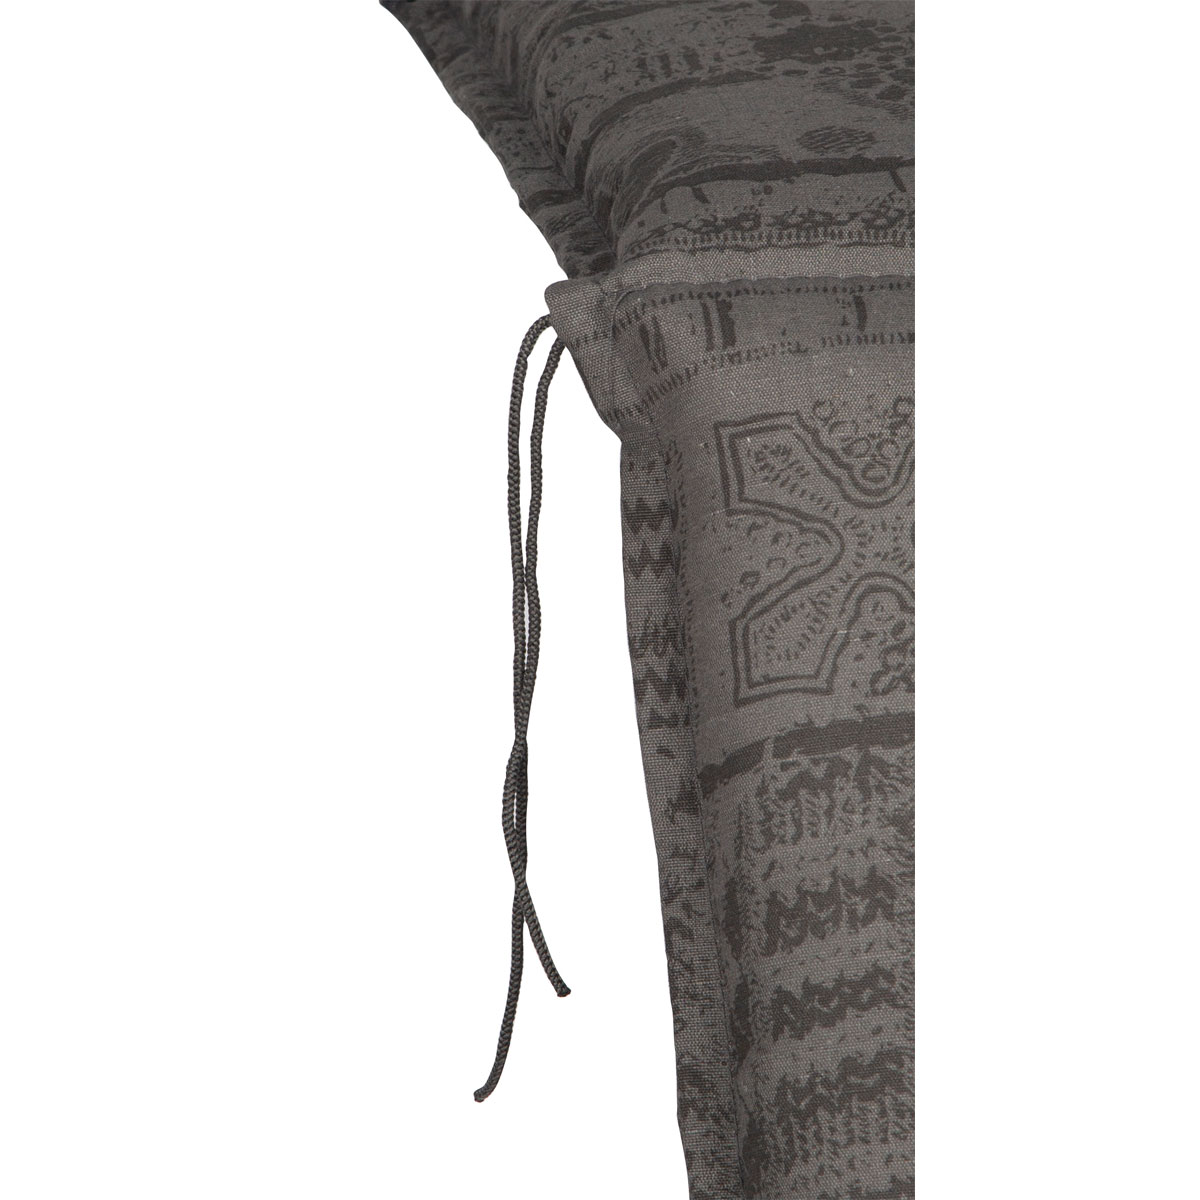 Saumauflage Boa Vista M127 Hochlehner Ornamente grau auf grau | K000364817